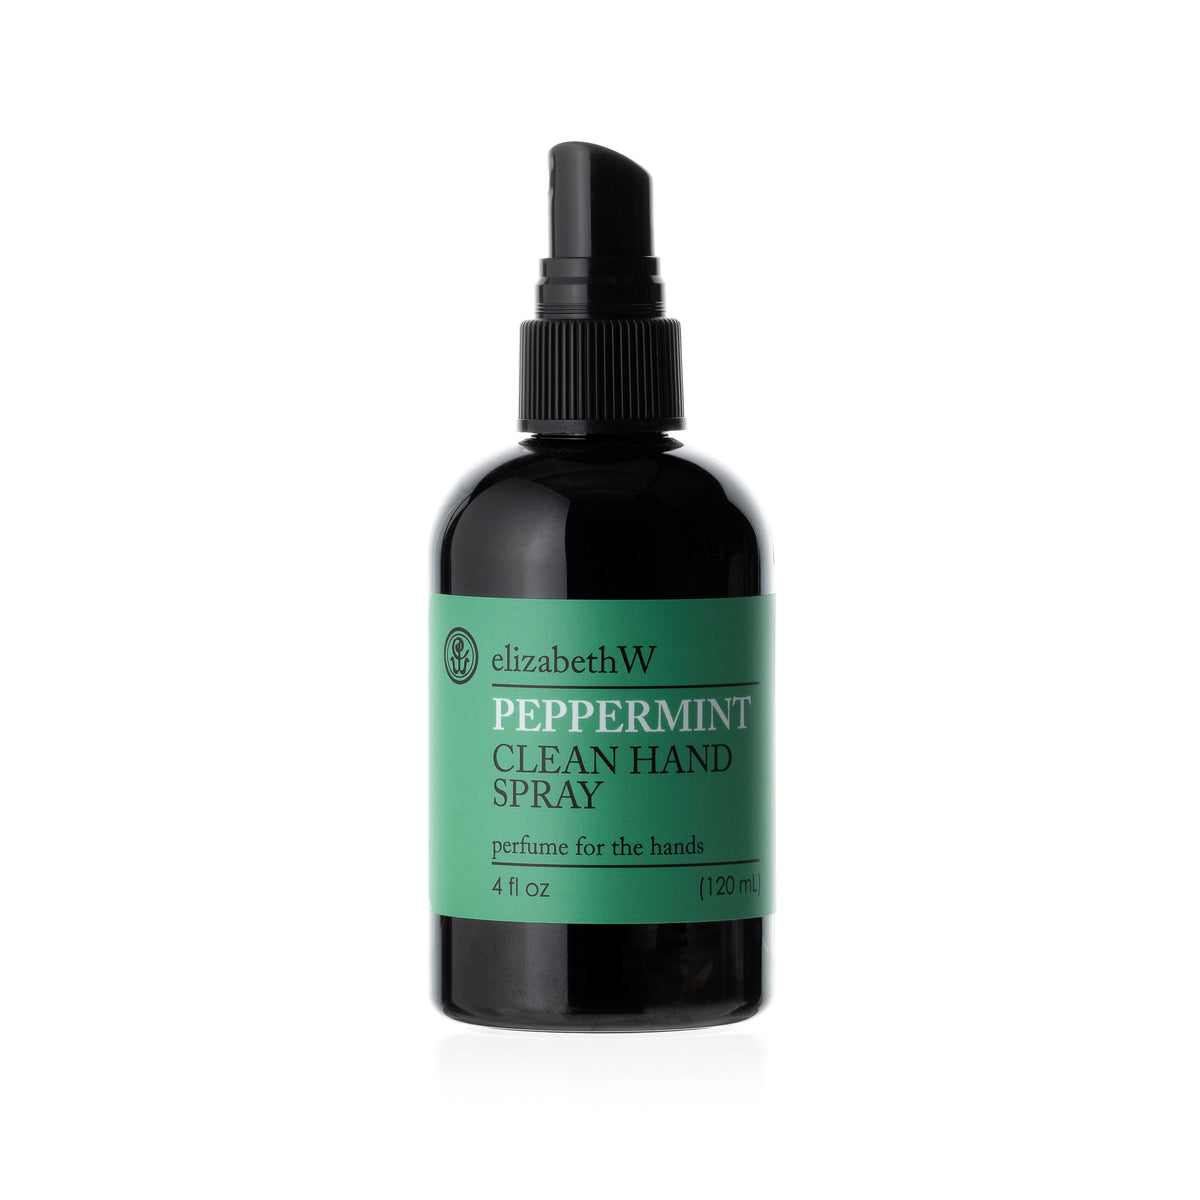 Peppermint Clean Hand Spray 4 fl oz